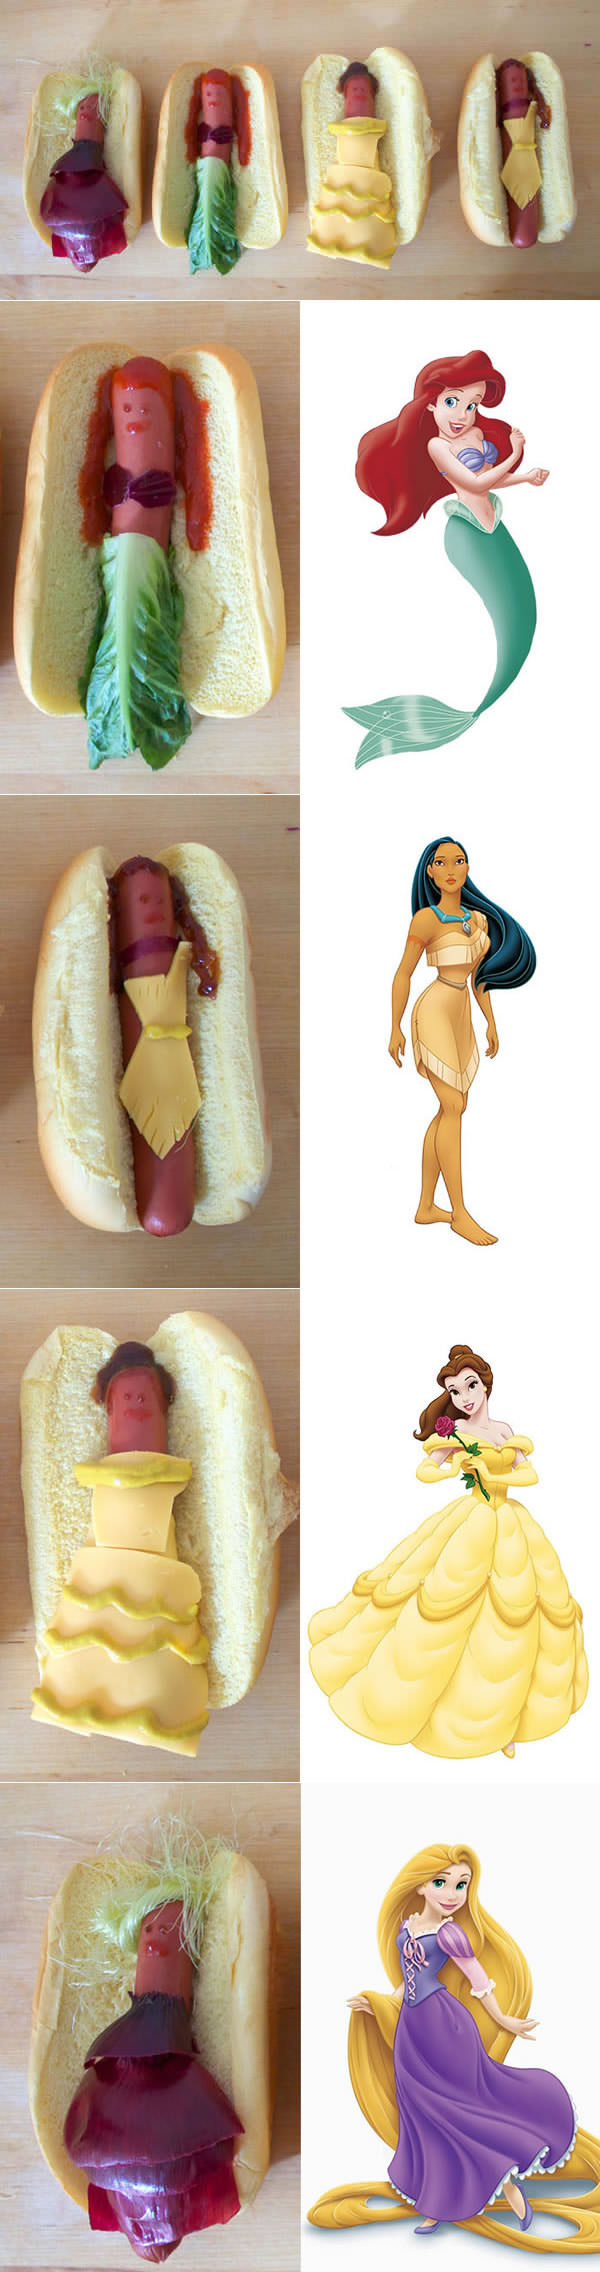 All Created - Disney Princess Hot Dogs